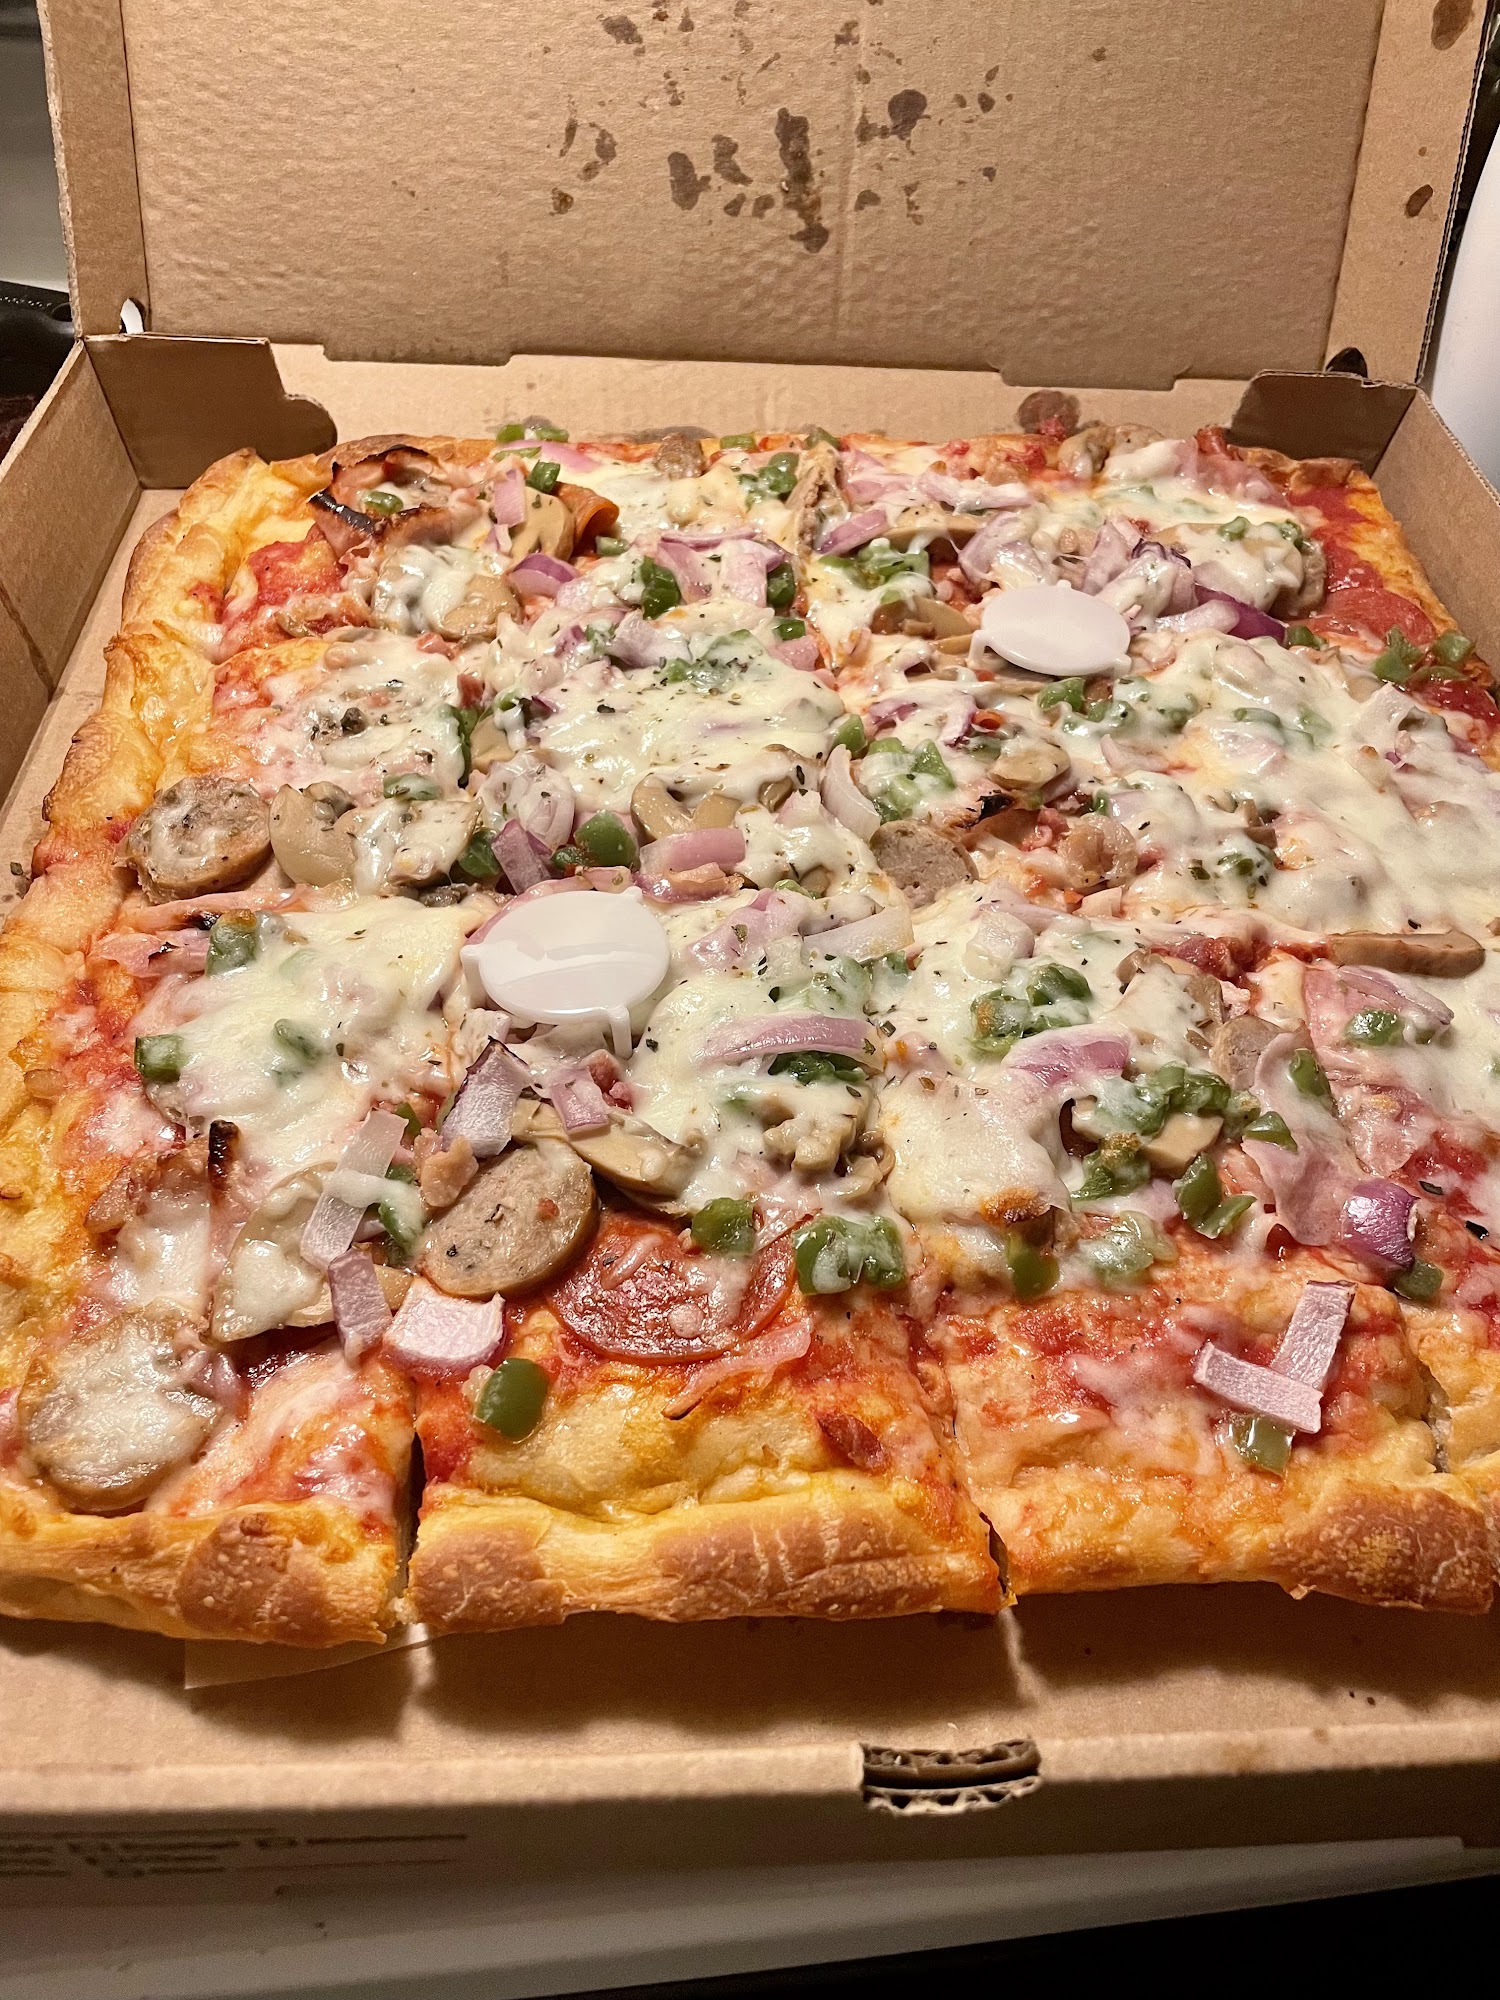 Maria's New York Pizzeria